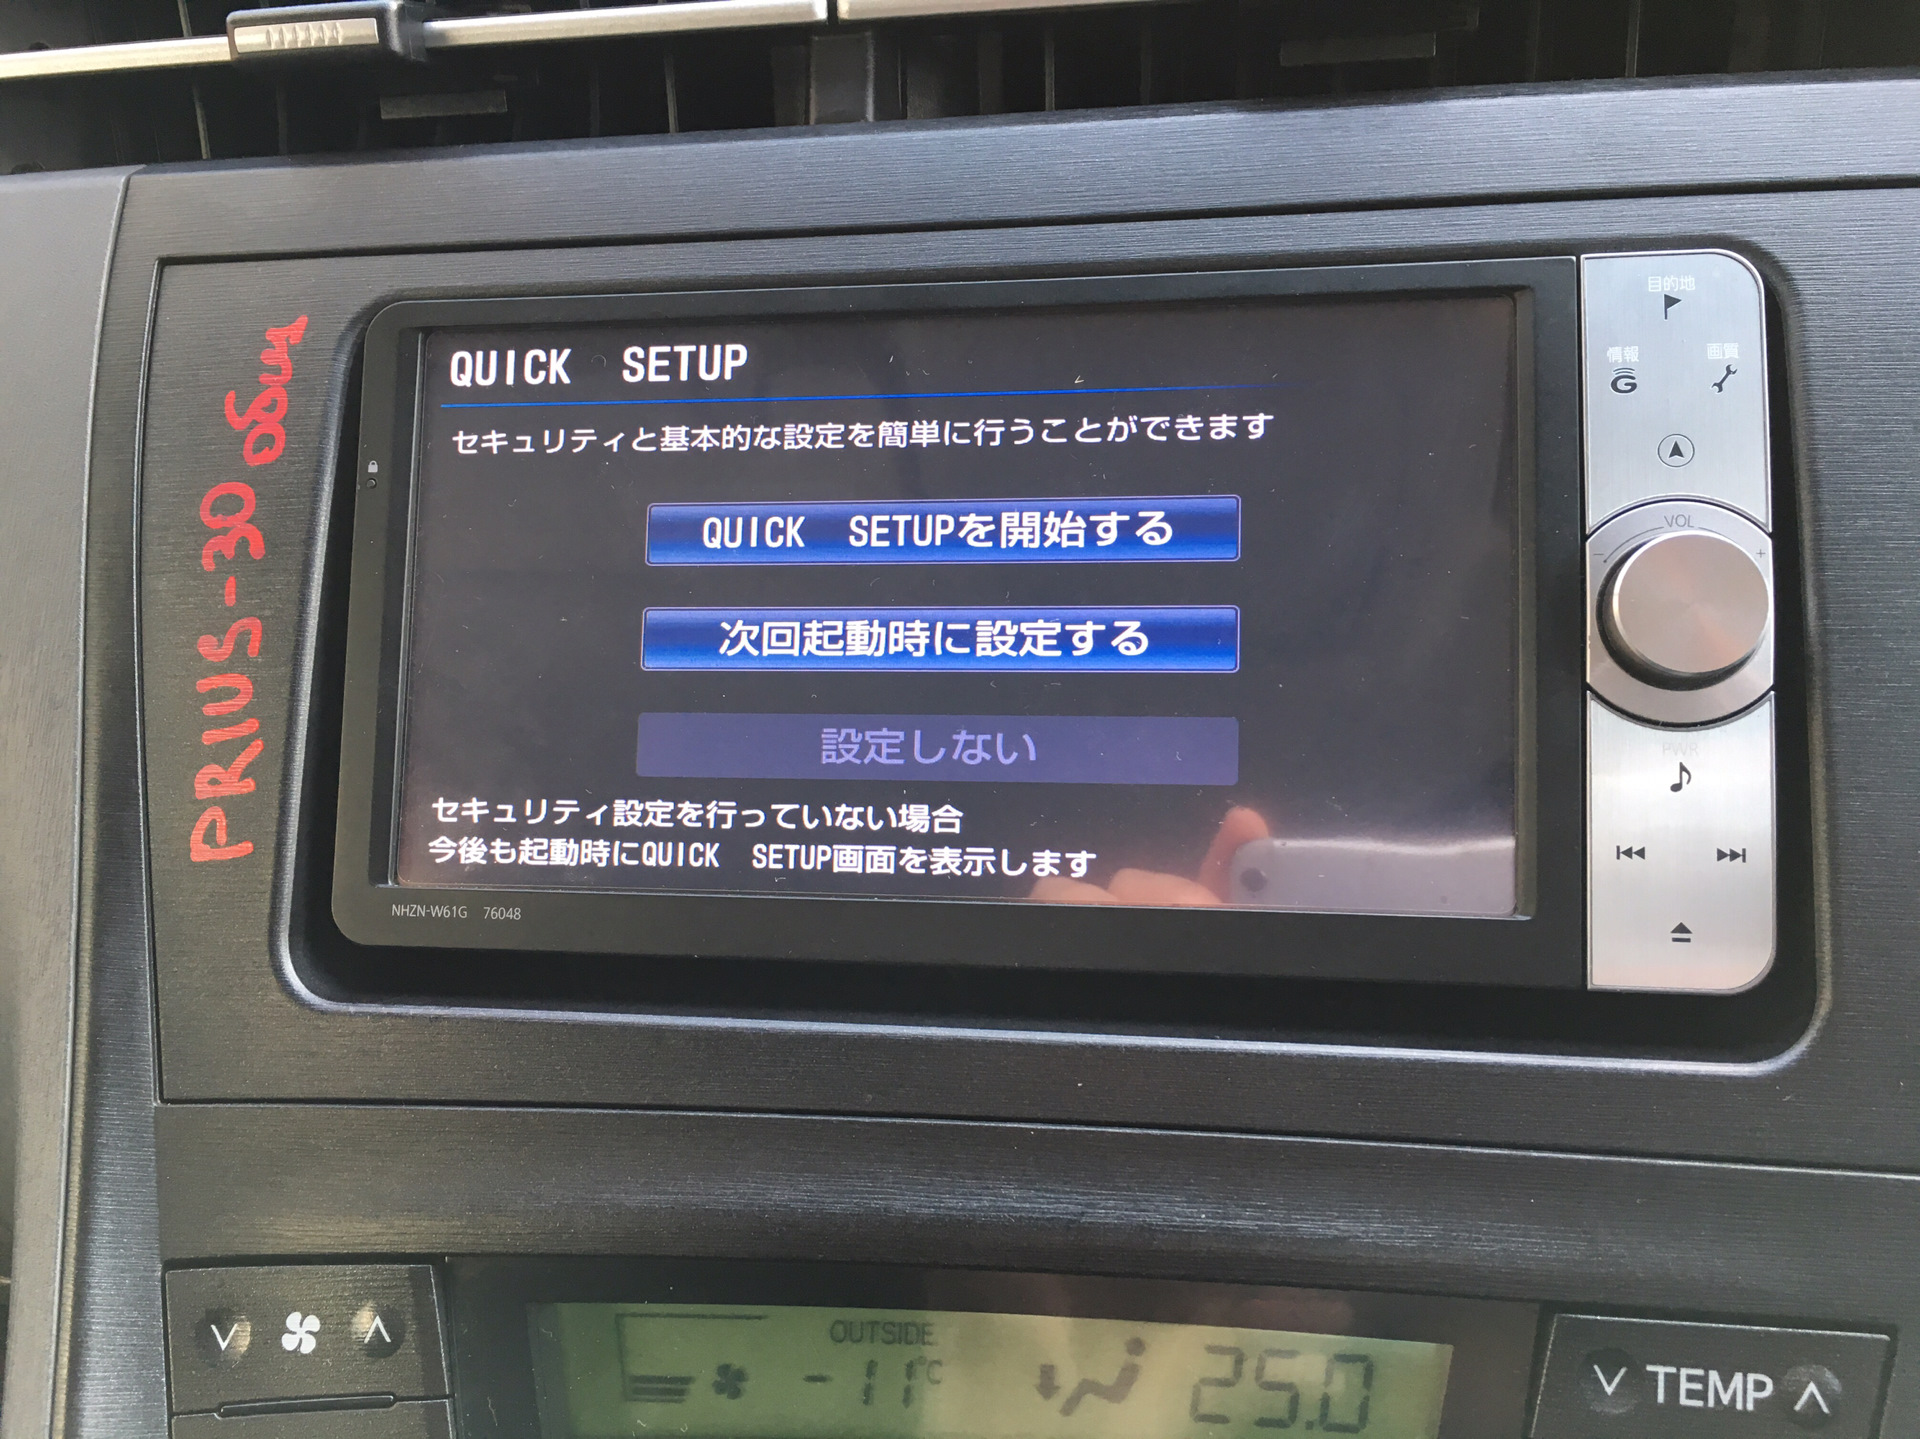 Язык магнитофона. Toyota NHZN-w61g. Автомагнитола NHZN-w61g. NHZN-w61g. Магнитофон NHZN w61g.